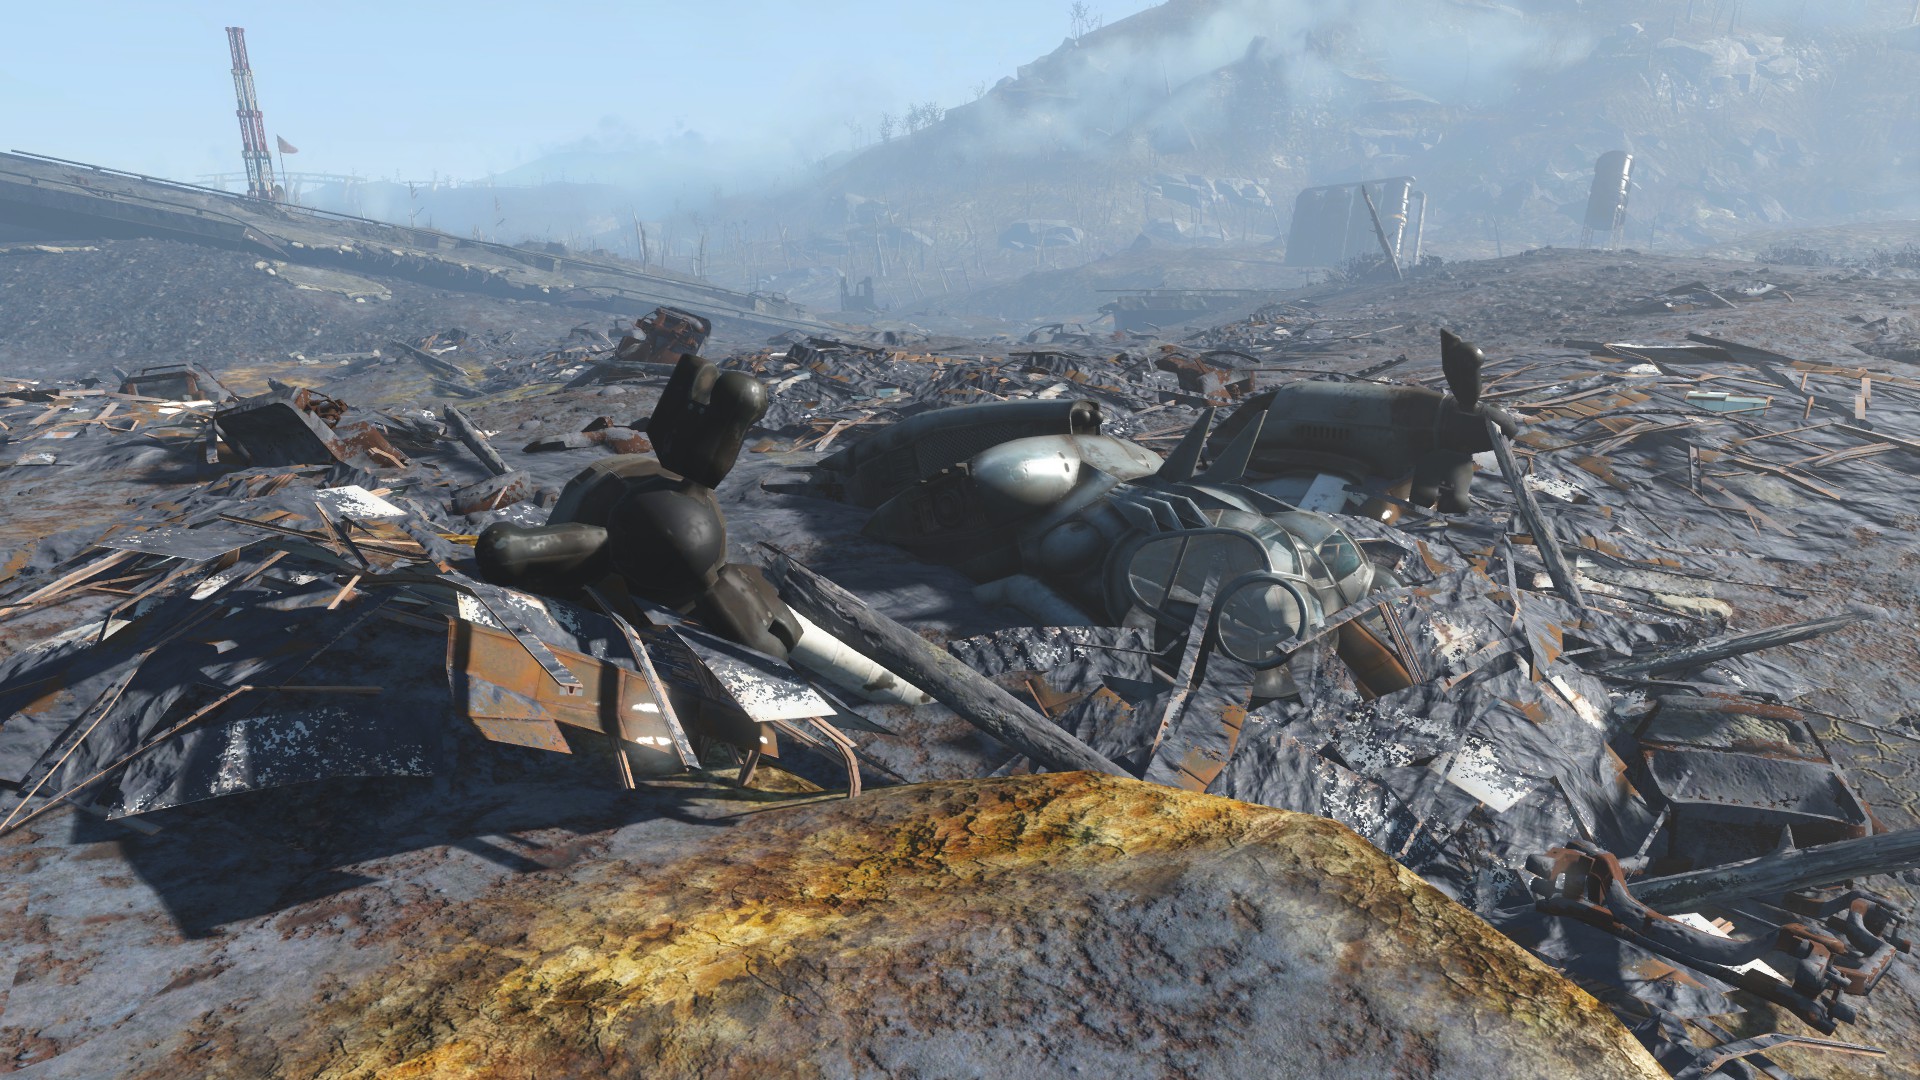 Vertibird wreckage | Fallout Wiki | FANDOM powered by Wikia